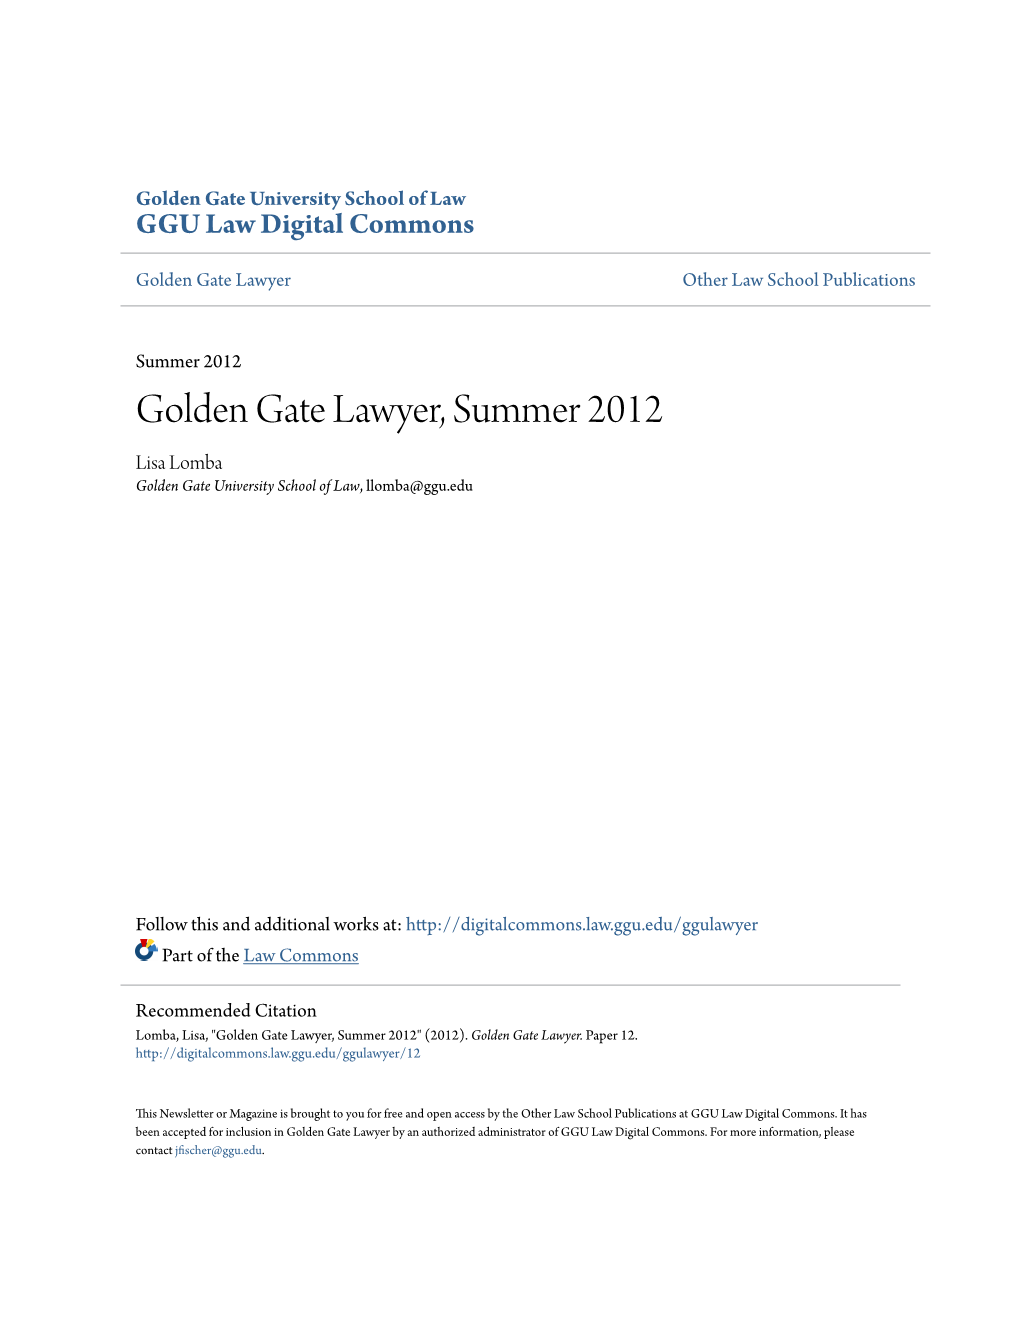 Golden Gate Lawyer, Summer 2012 Lisa Lomba Golden Gate University School of Law, Llomba@Ggu.Edu